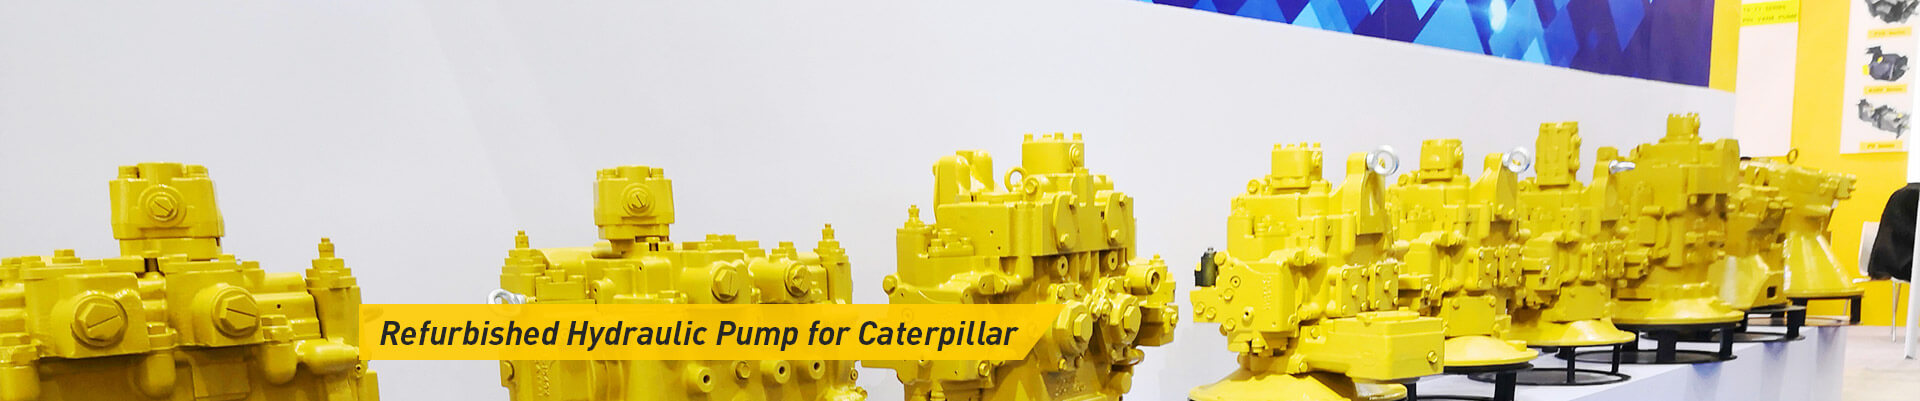 Refurbished Hydraulic Pump for Caterpillar